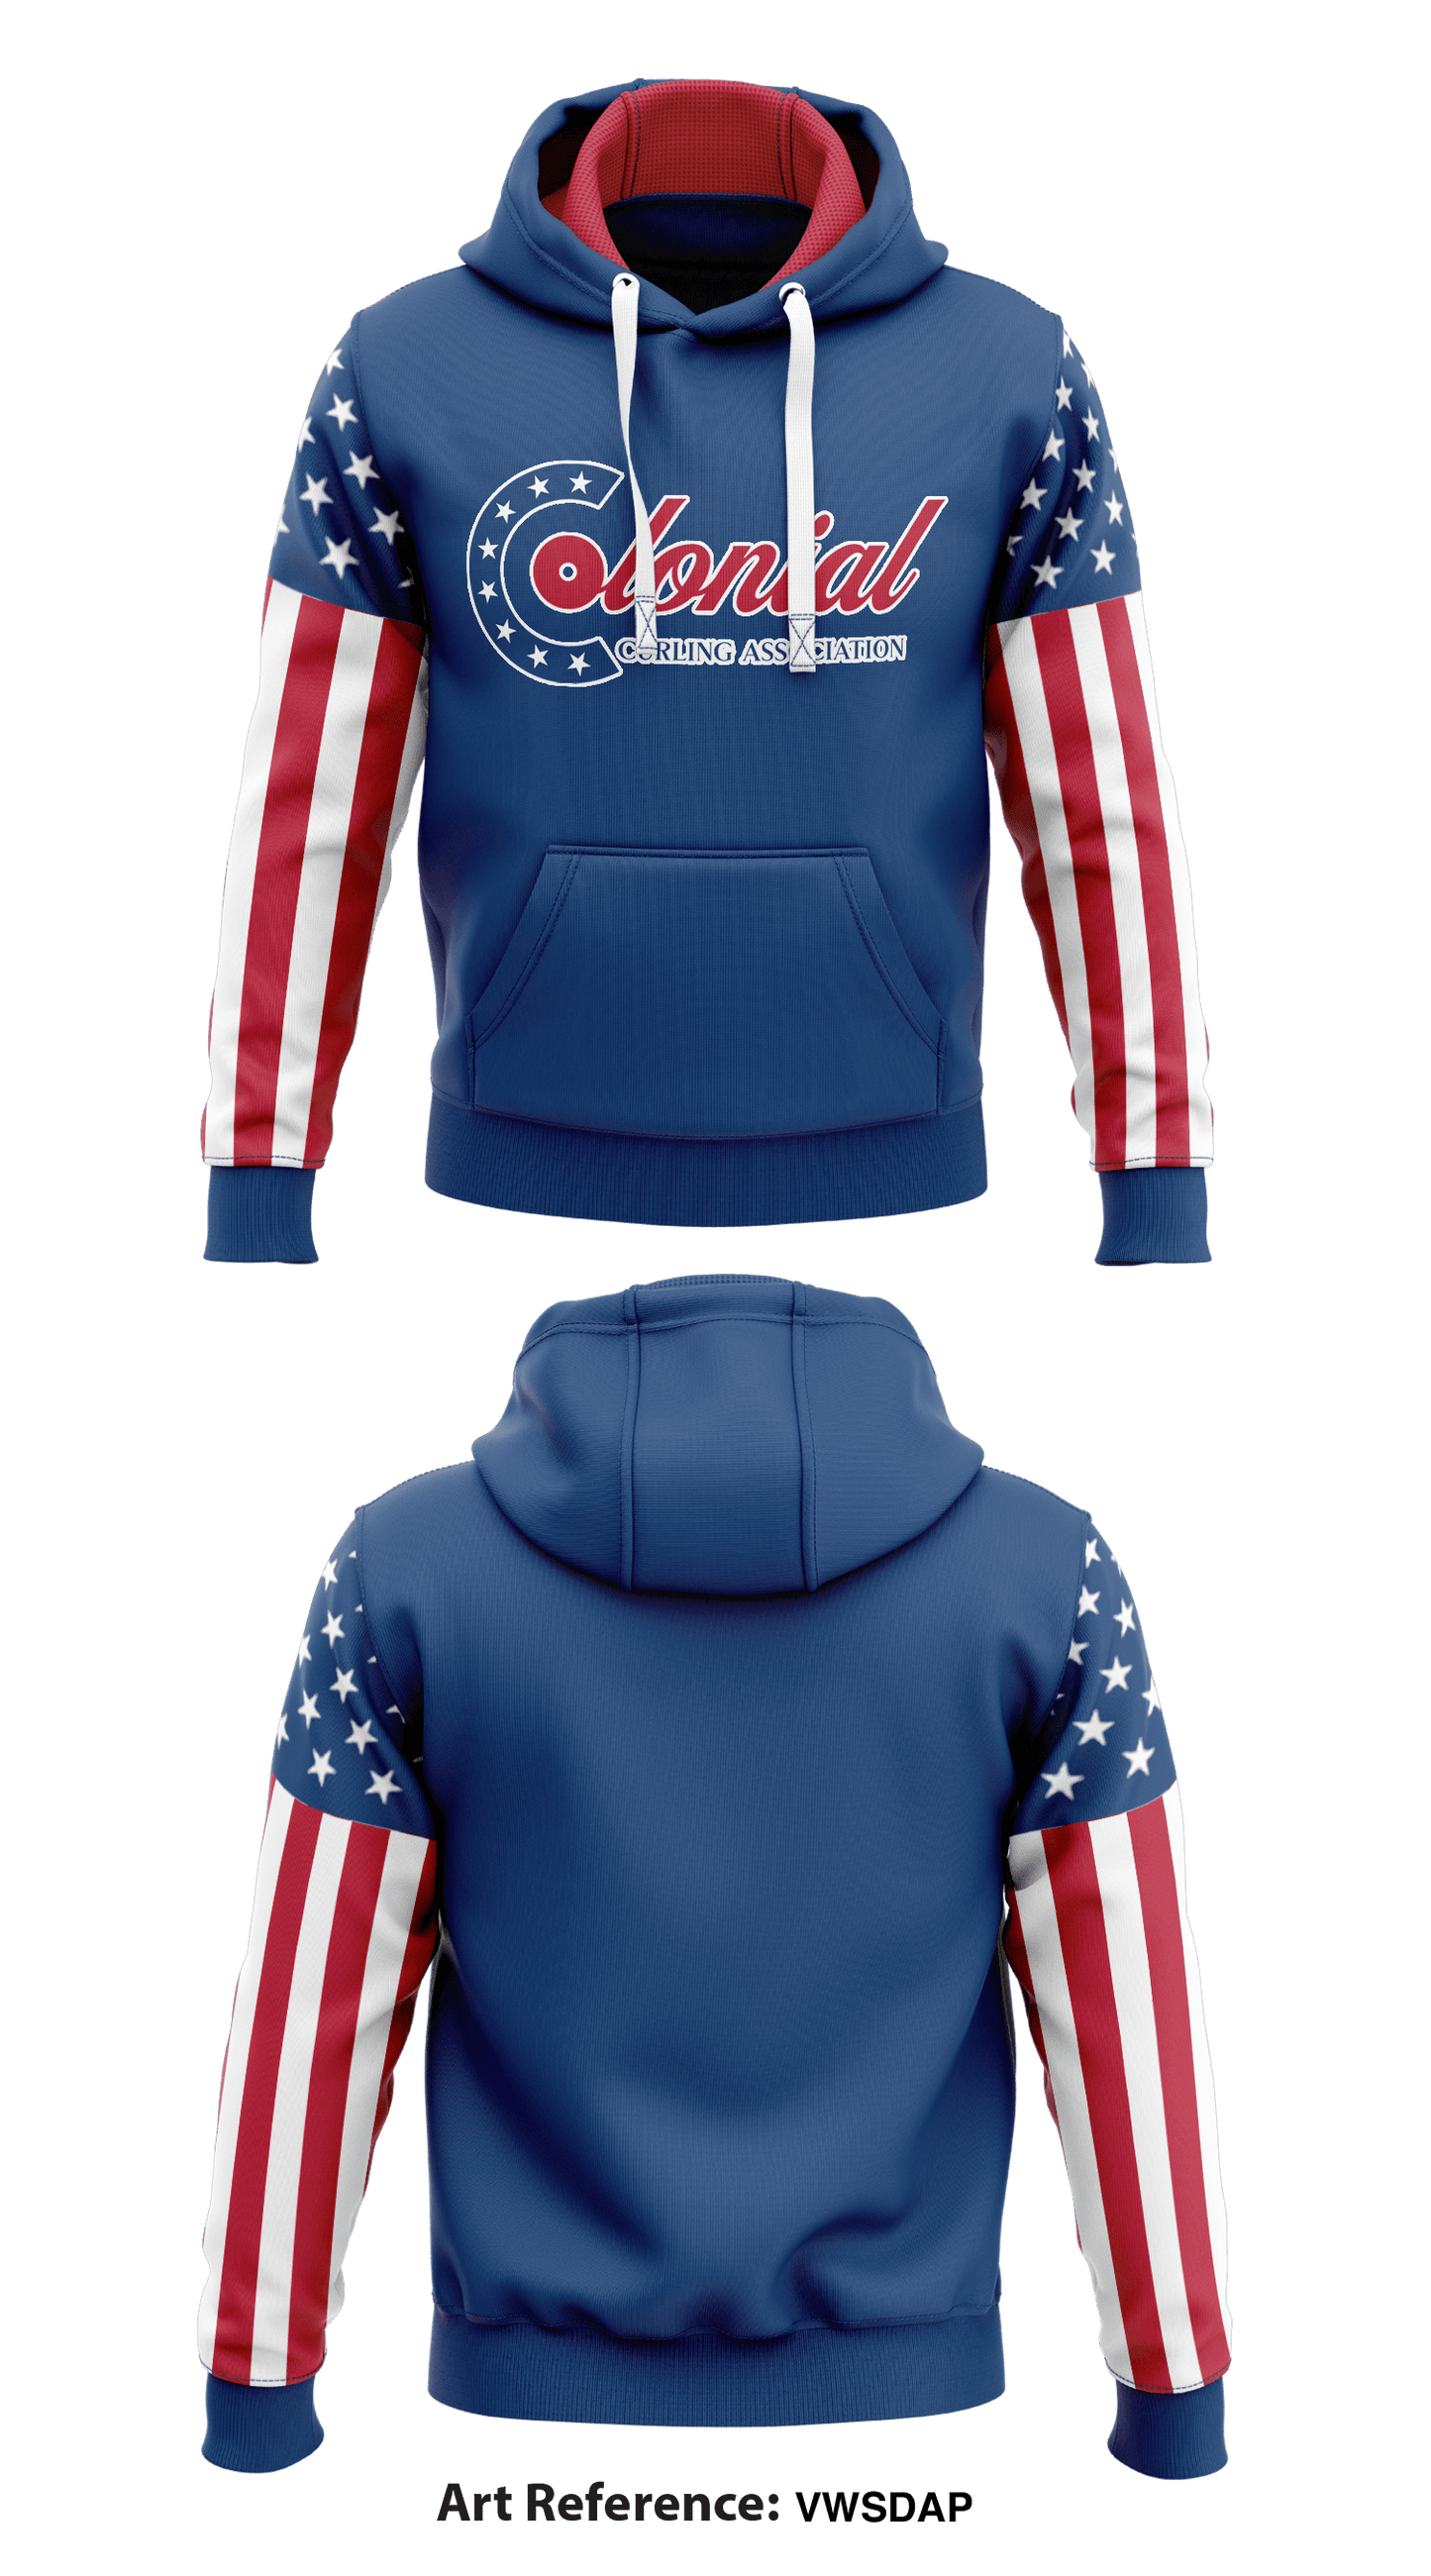 Colonial Curling Association Store 1  Core Men's Hooded Performance Sweatshirt - VwSDAP